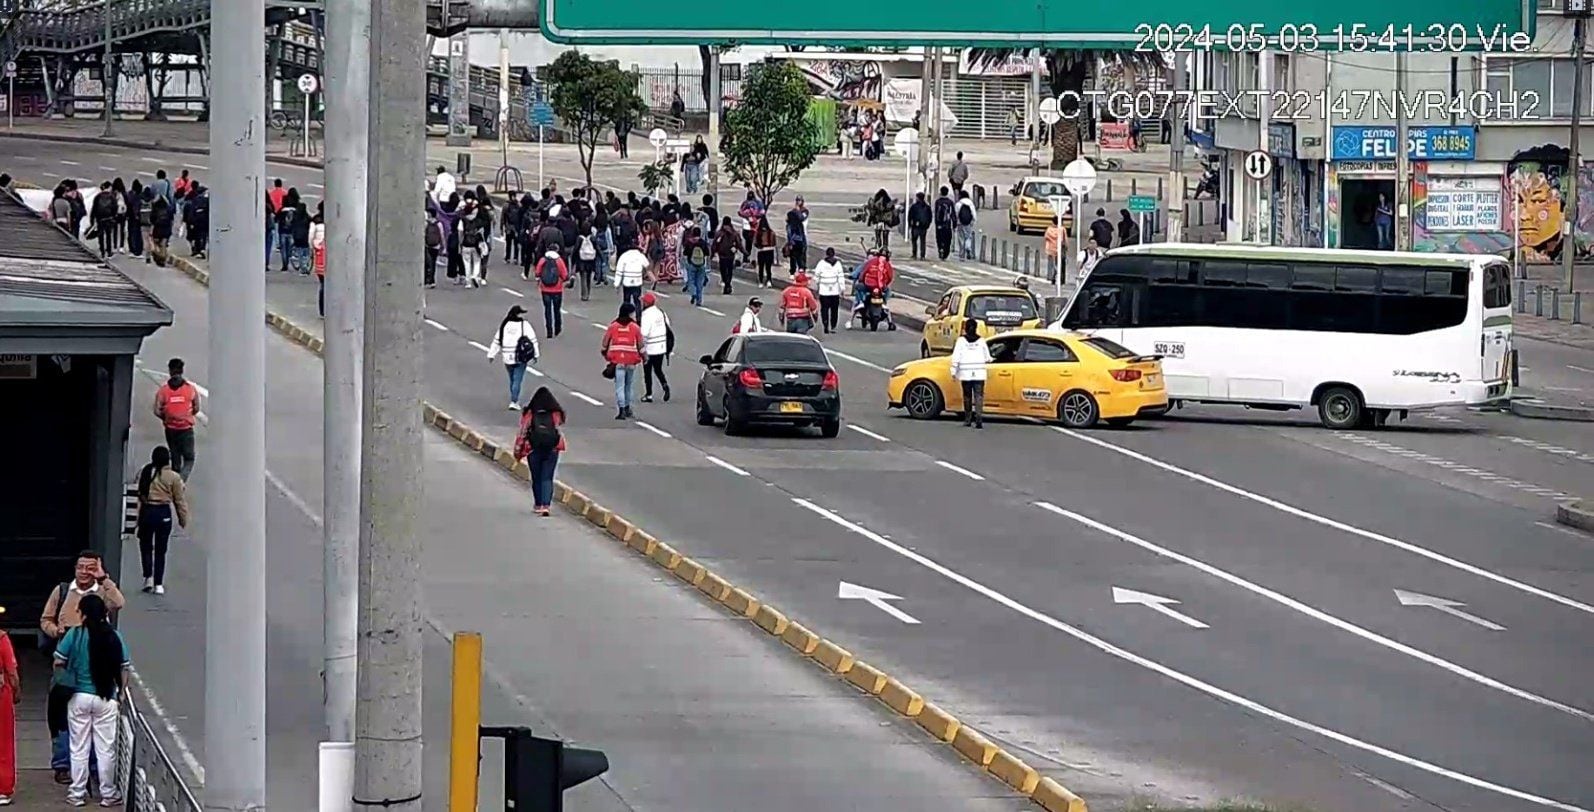 Al momento se presenta afectación vial por manifestaciones - crédito Tránsito Bogotá